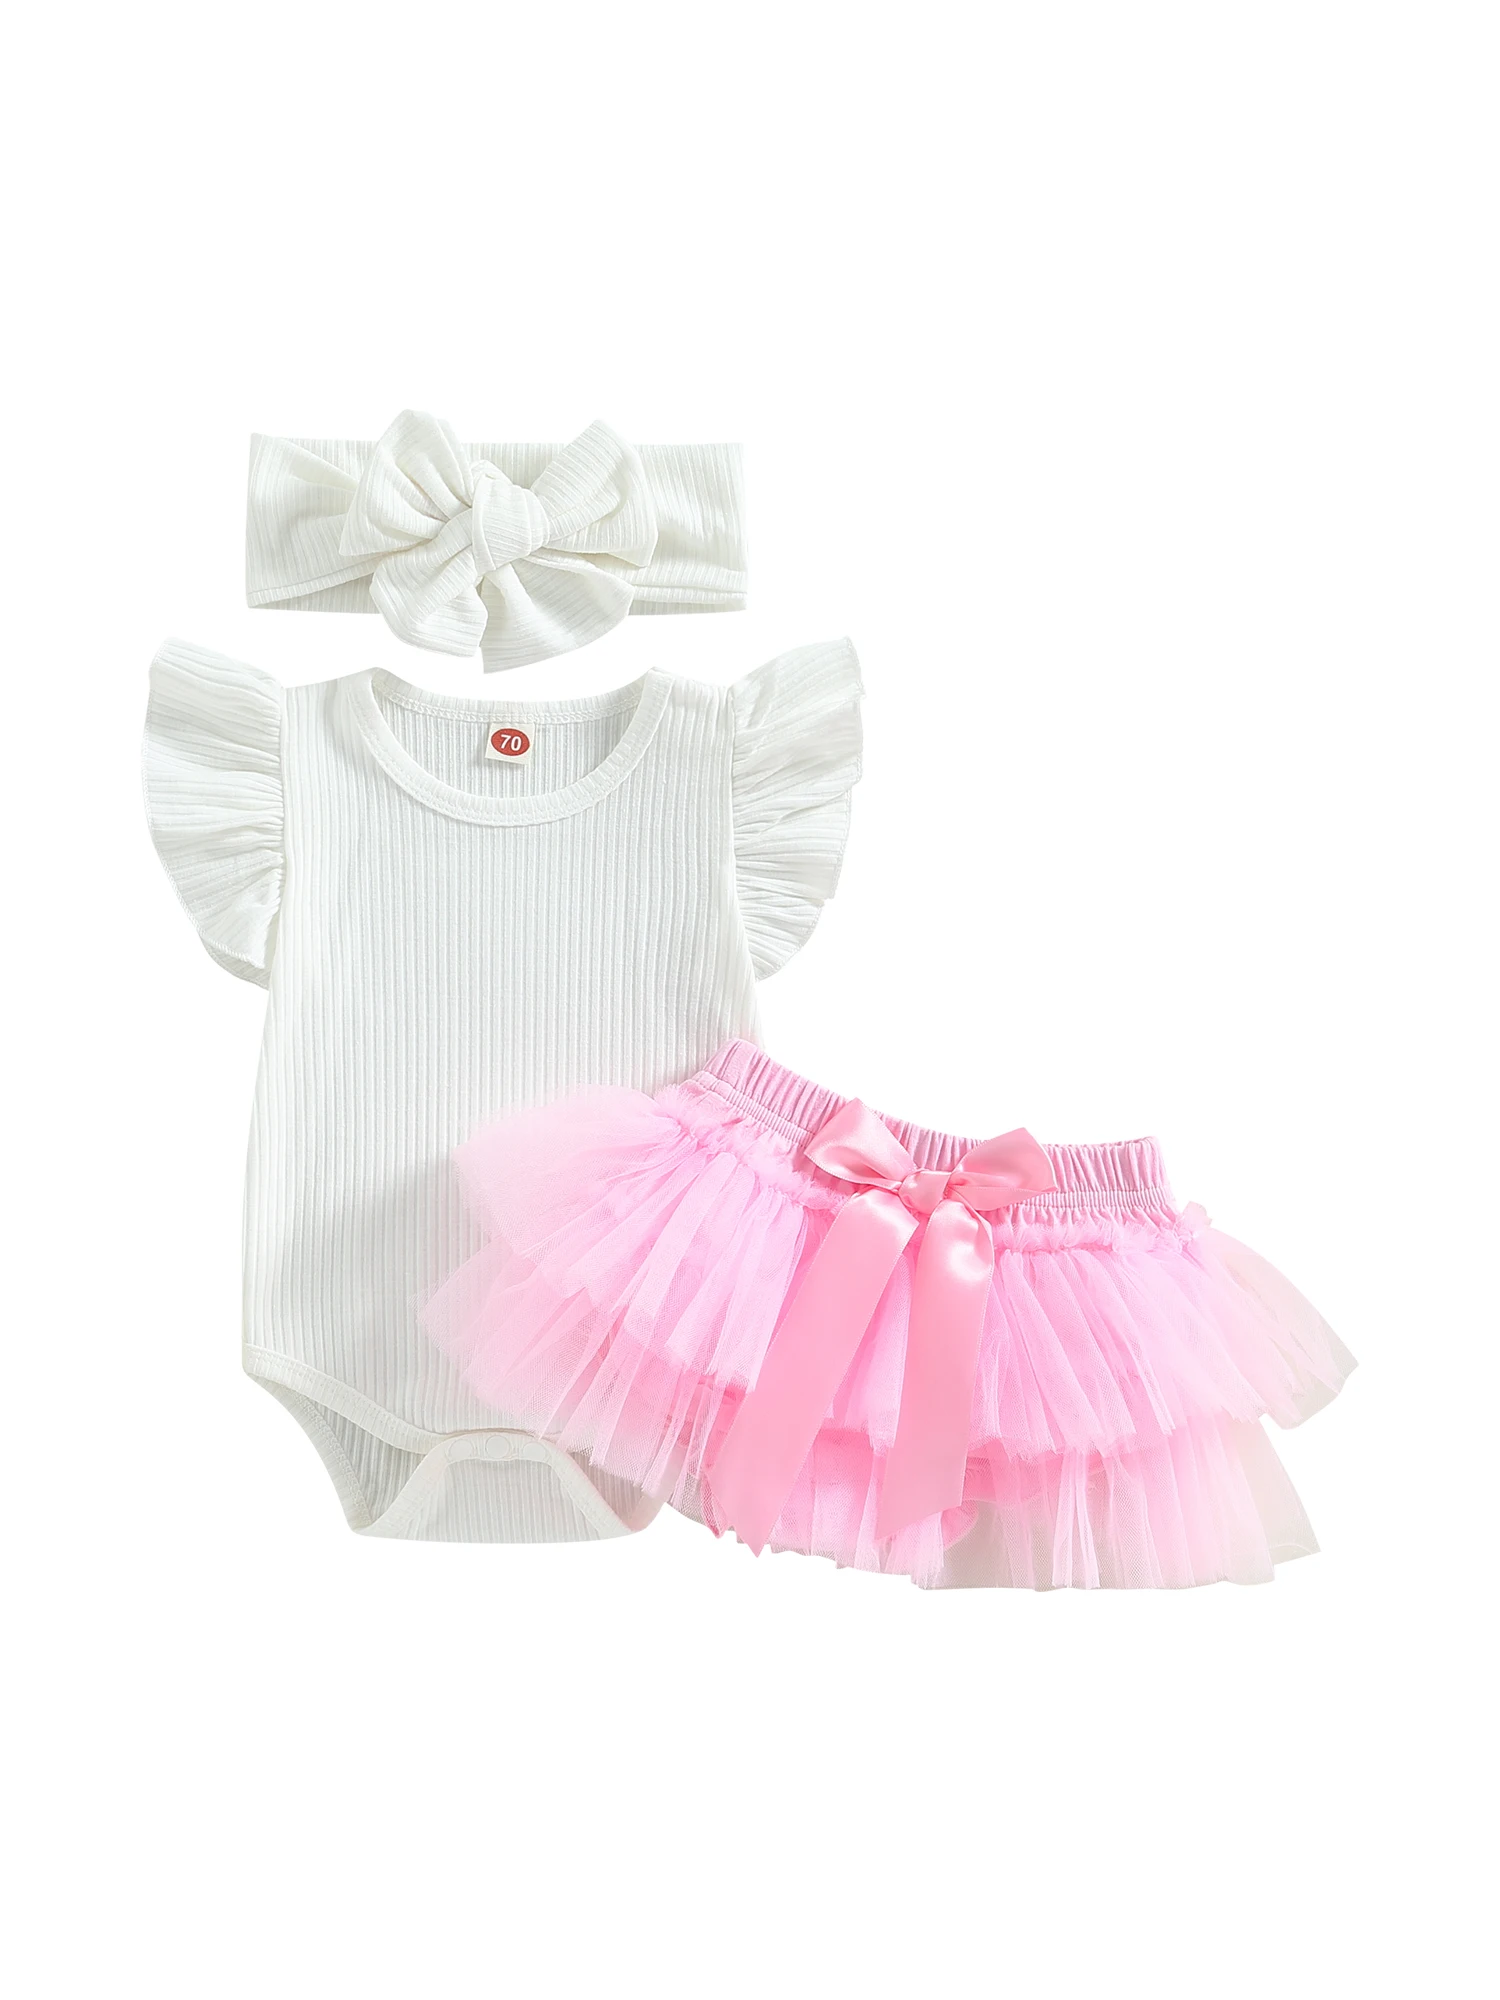 

Toddler Baby Girls 3Pcs Summer Outfits Fly Sleeve Ribbed Romper Tutu Shorts Headband Clothes Set